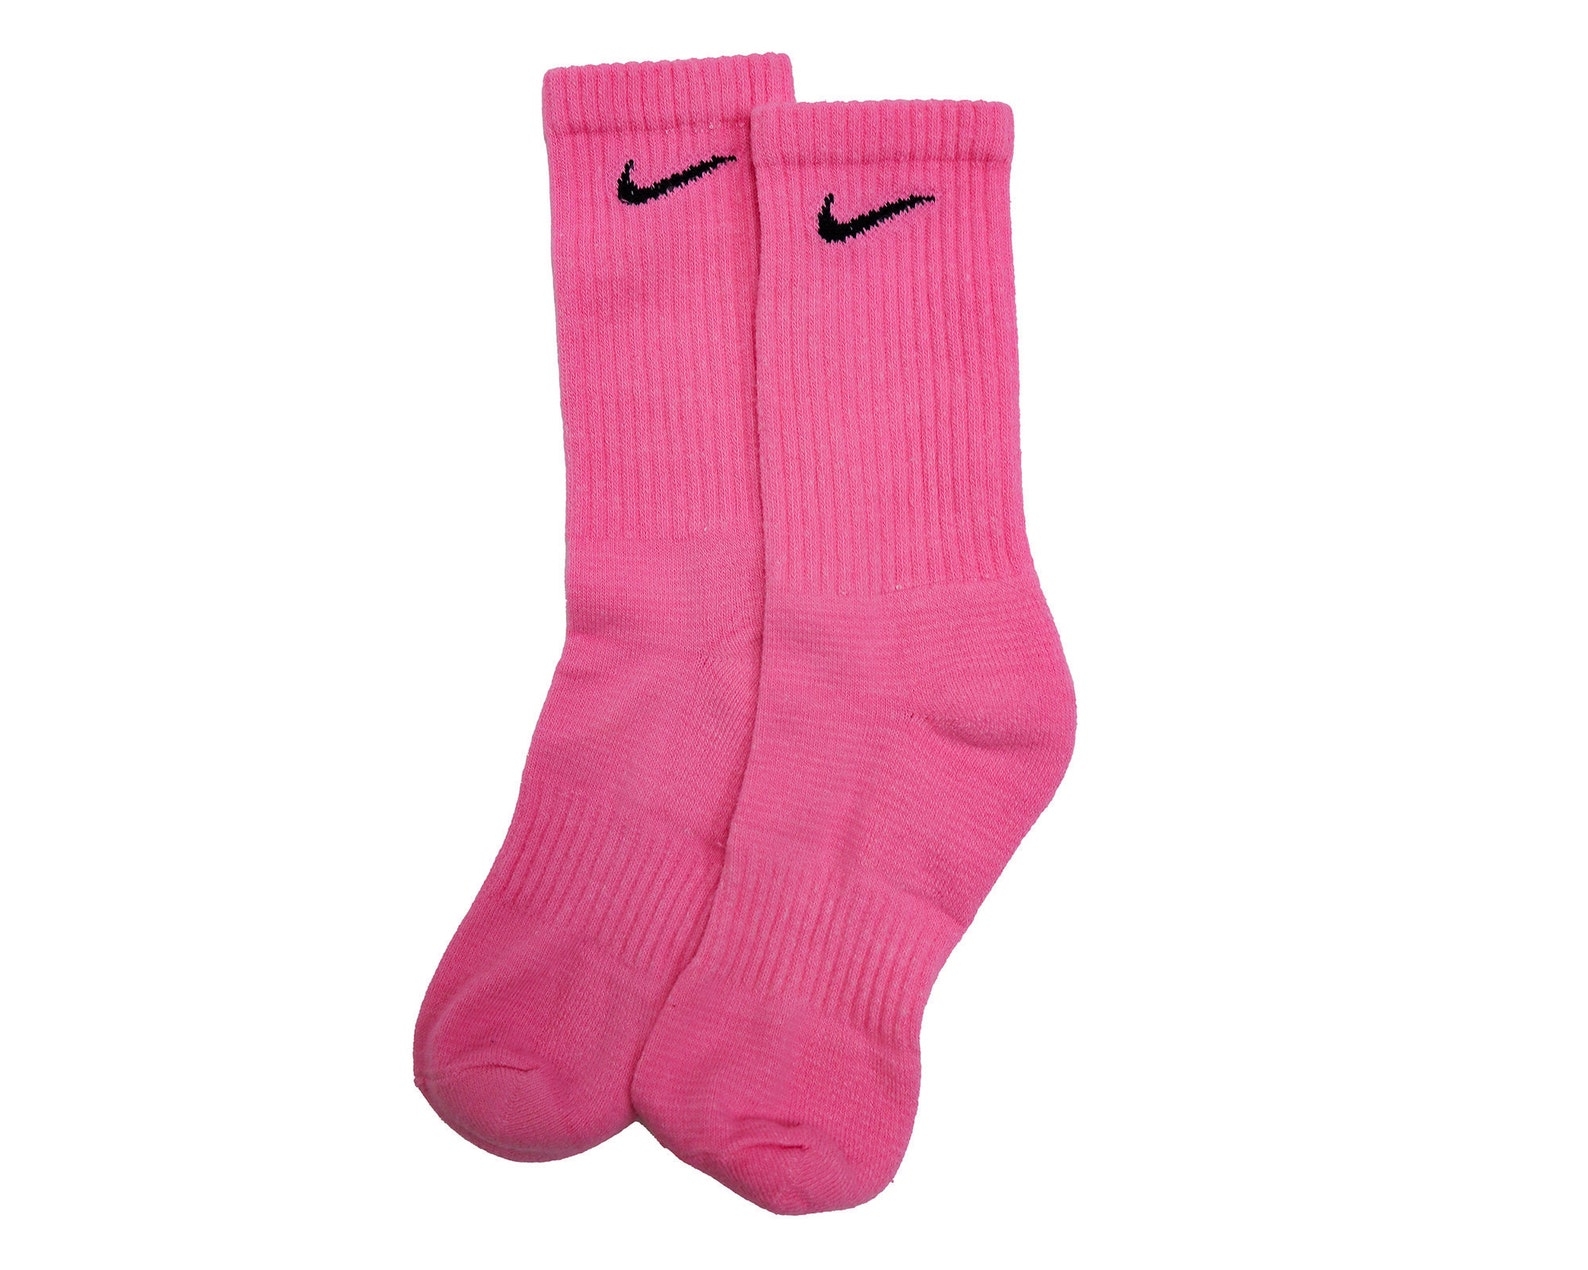 HOT PINK Official Nike Dyed Socks Hand Crew Socks Tye Dye - Etsy